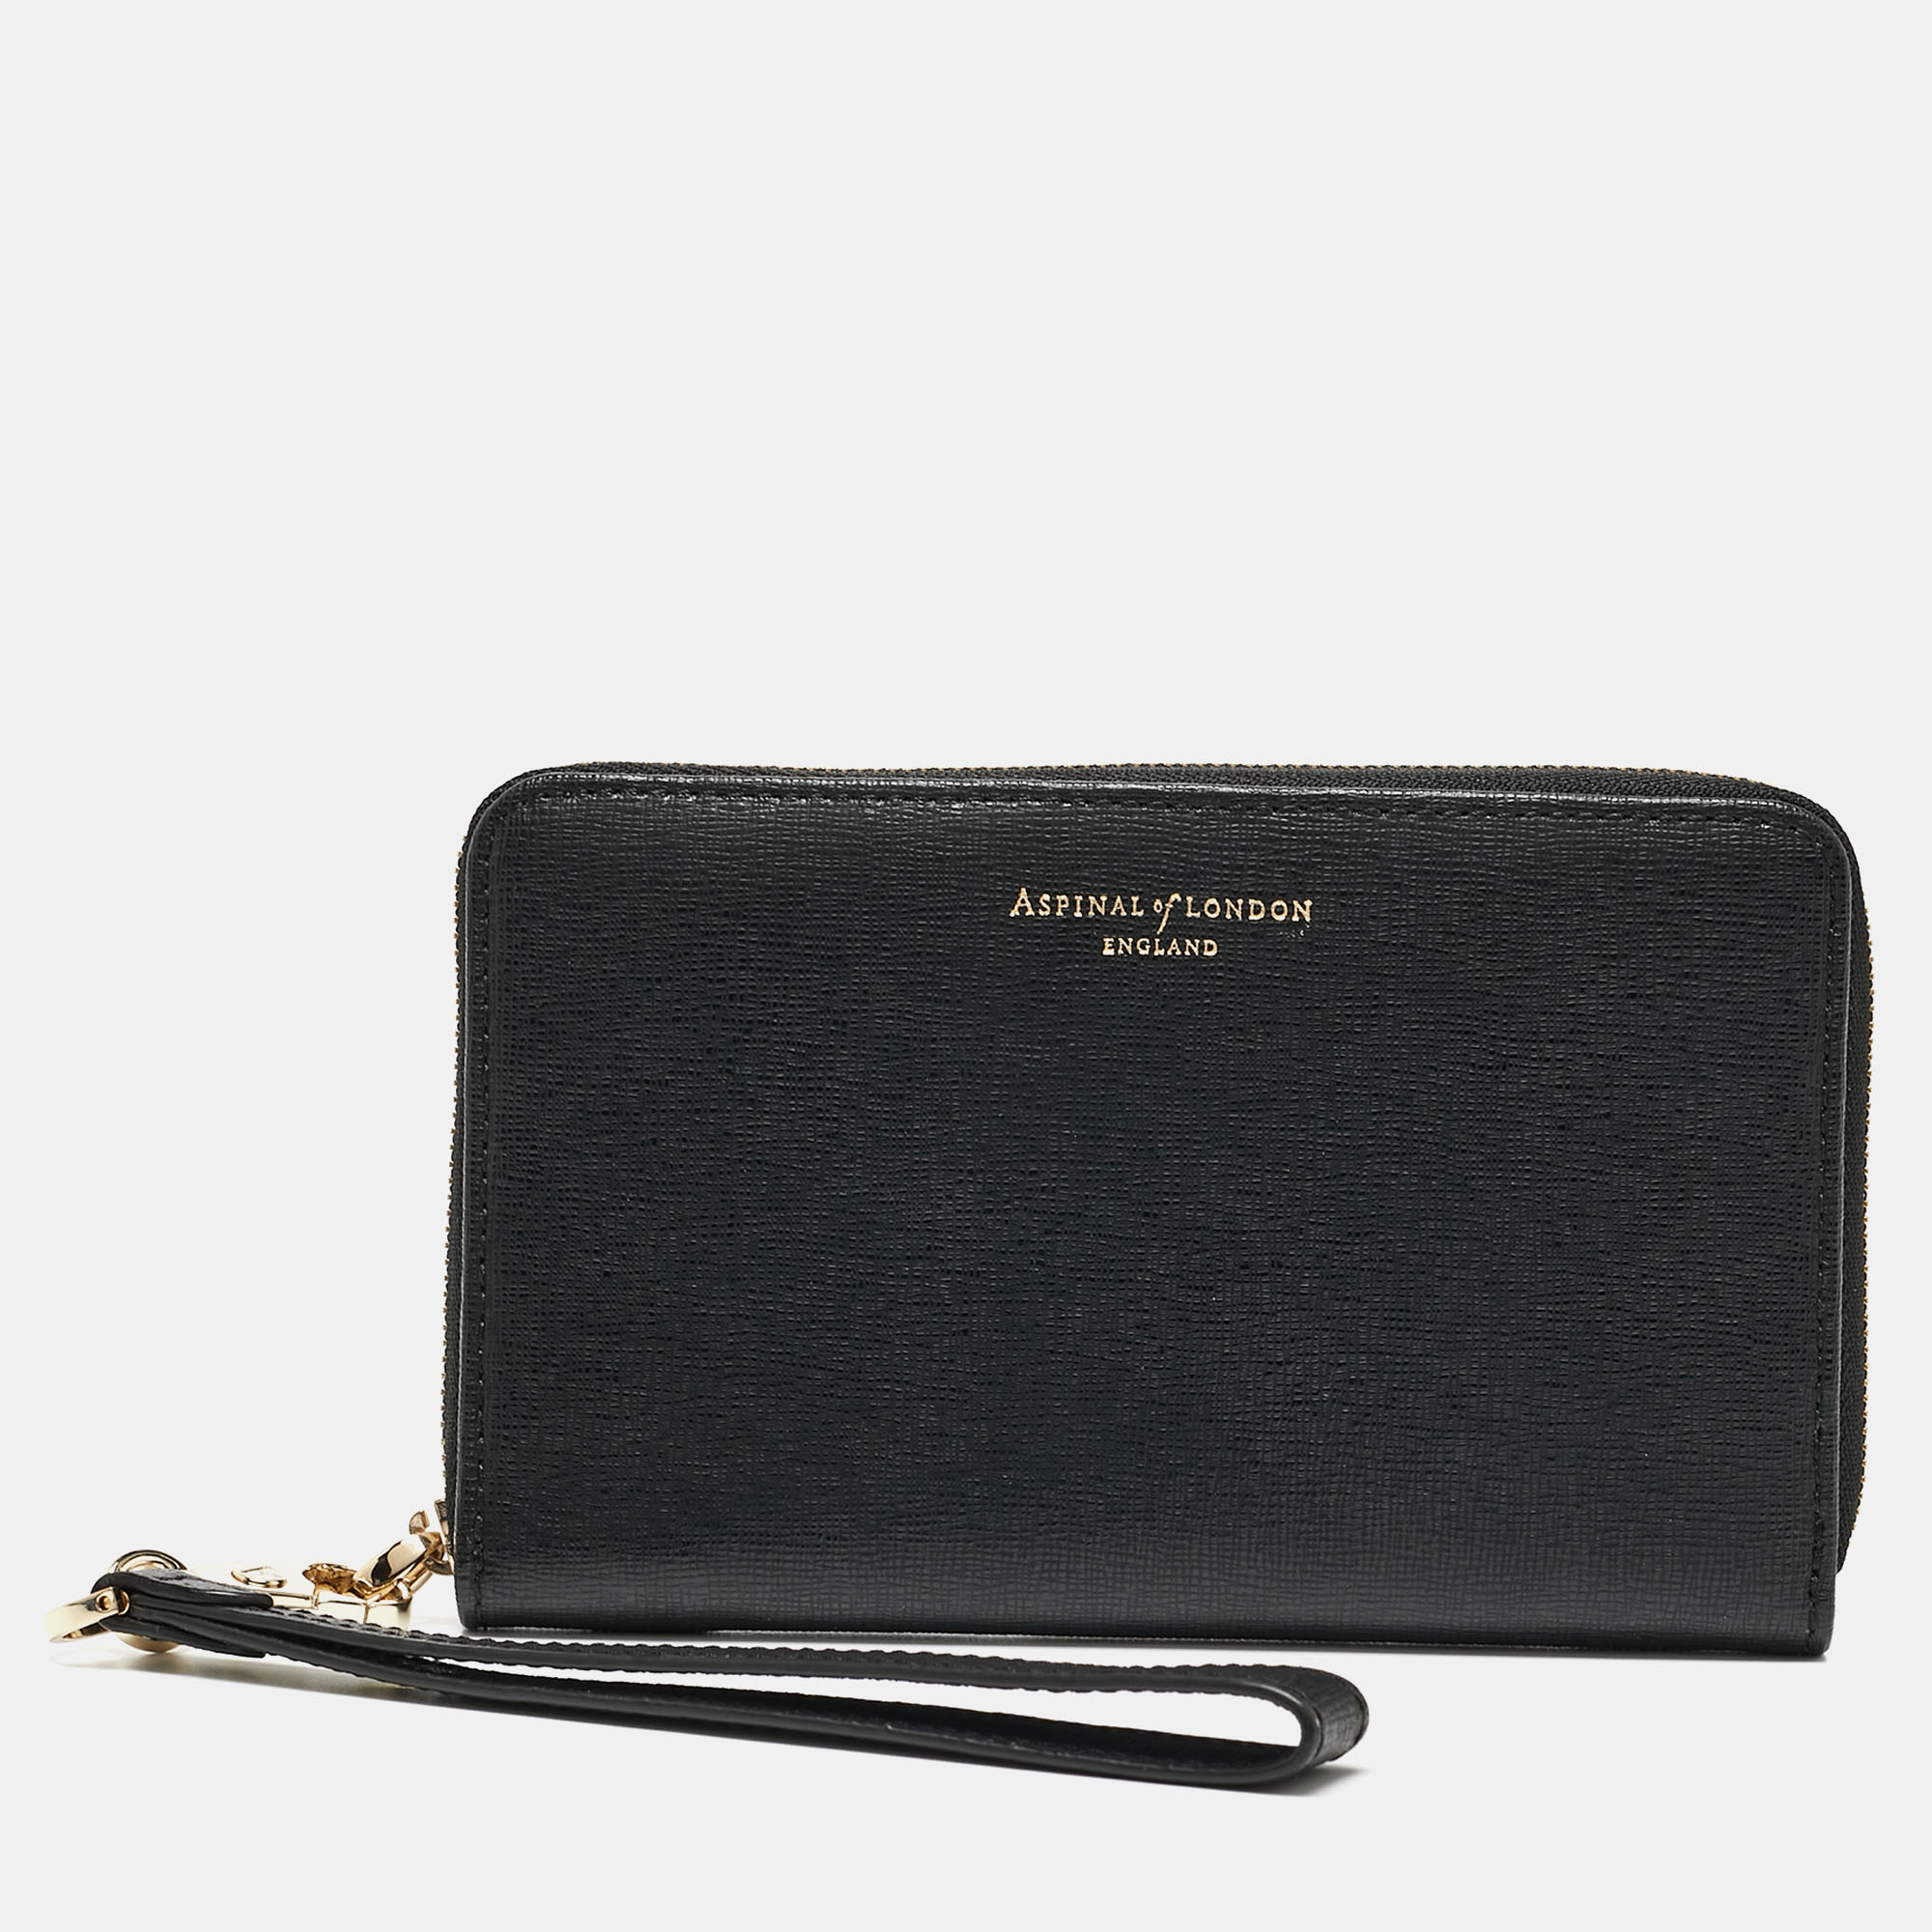 aspinal of london black leather zip around wristlet wallet